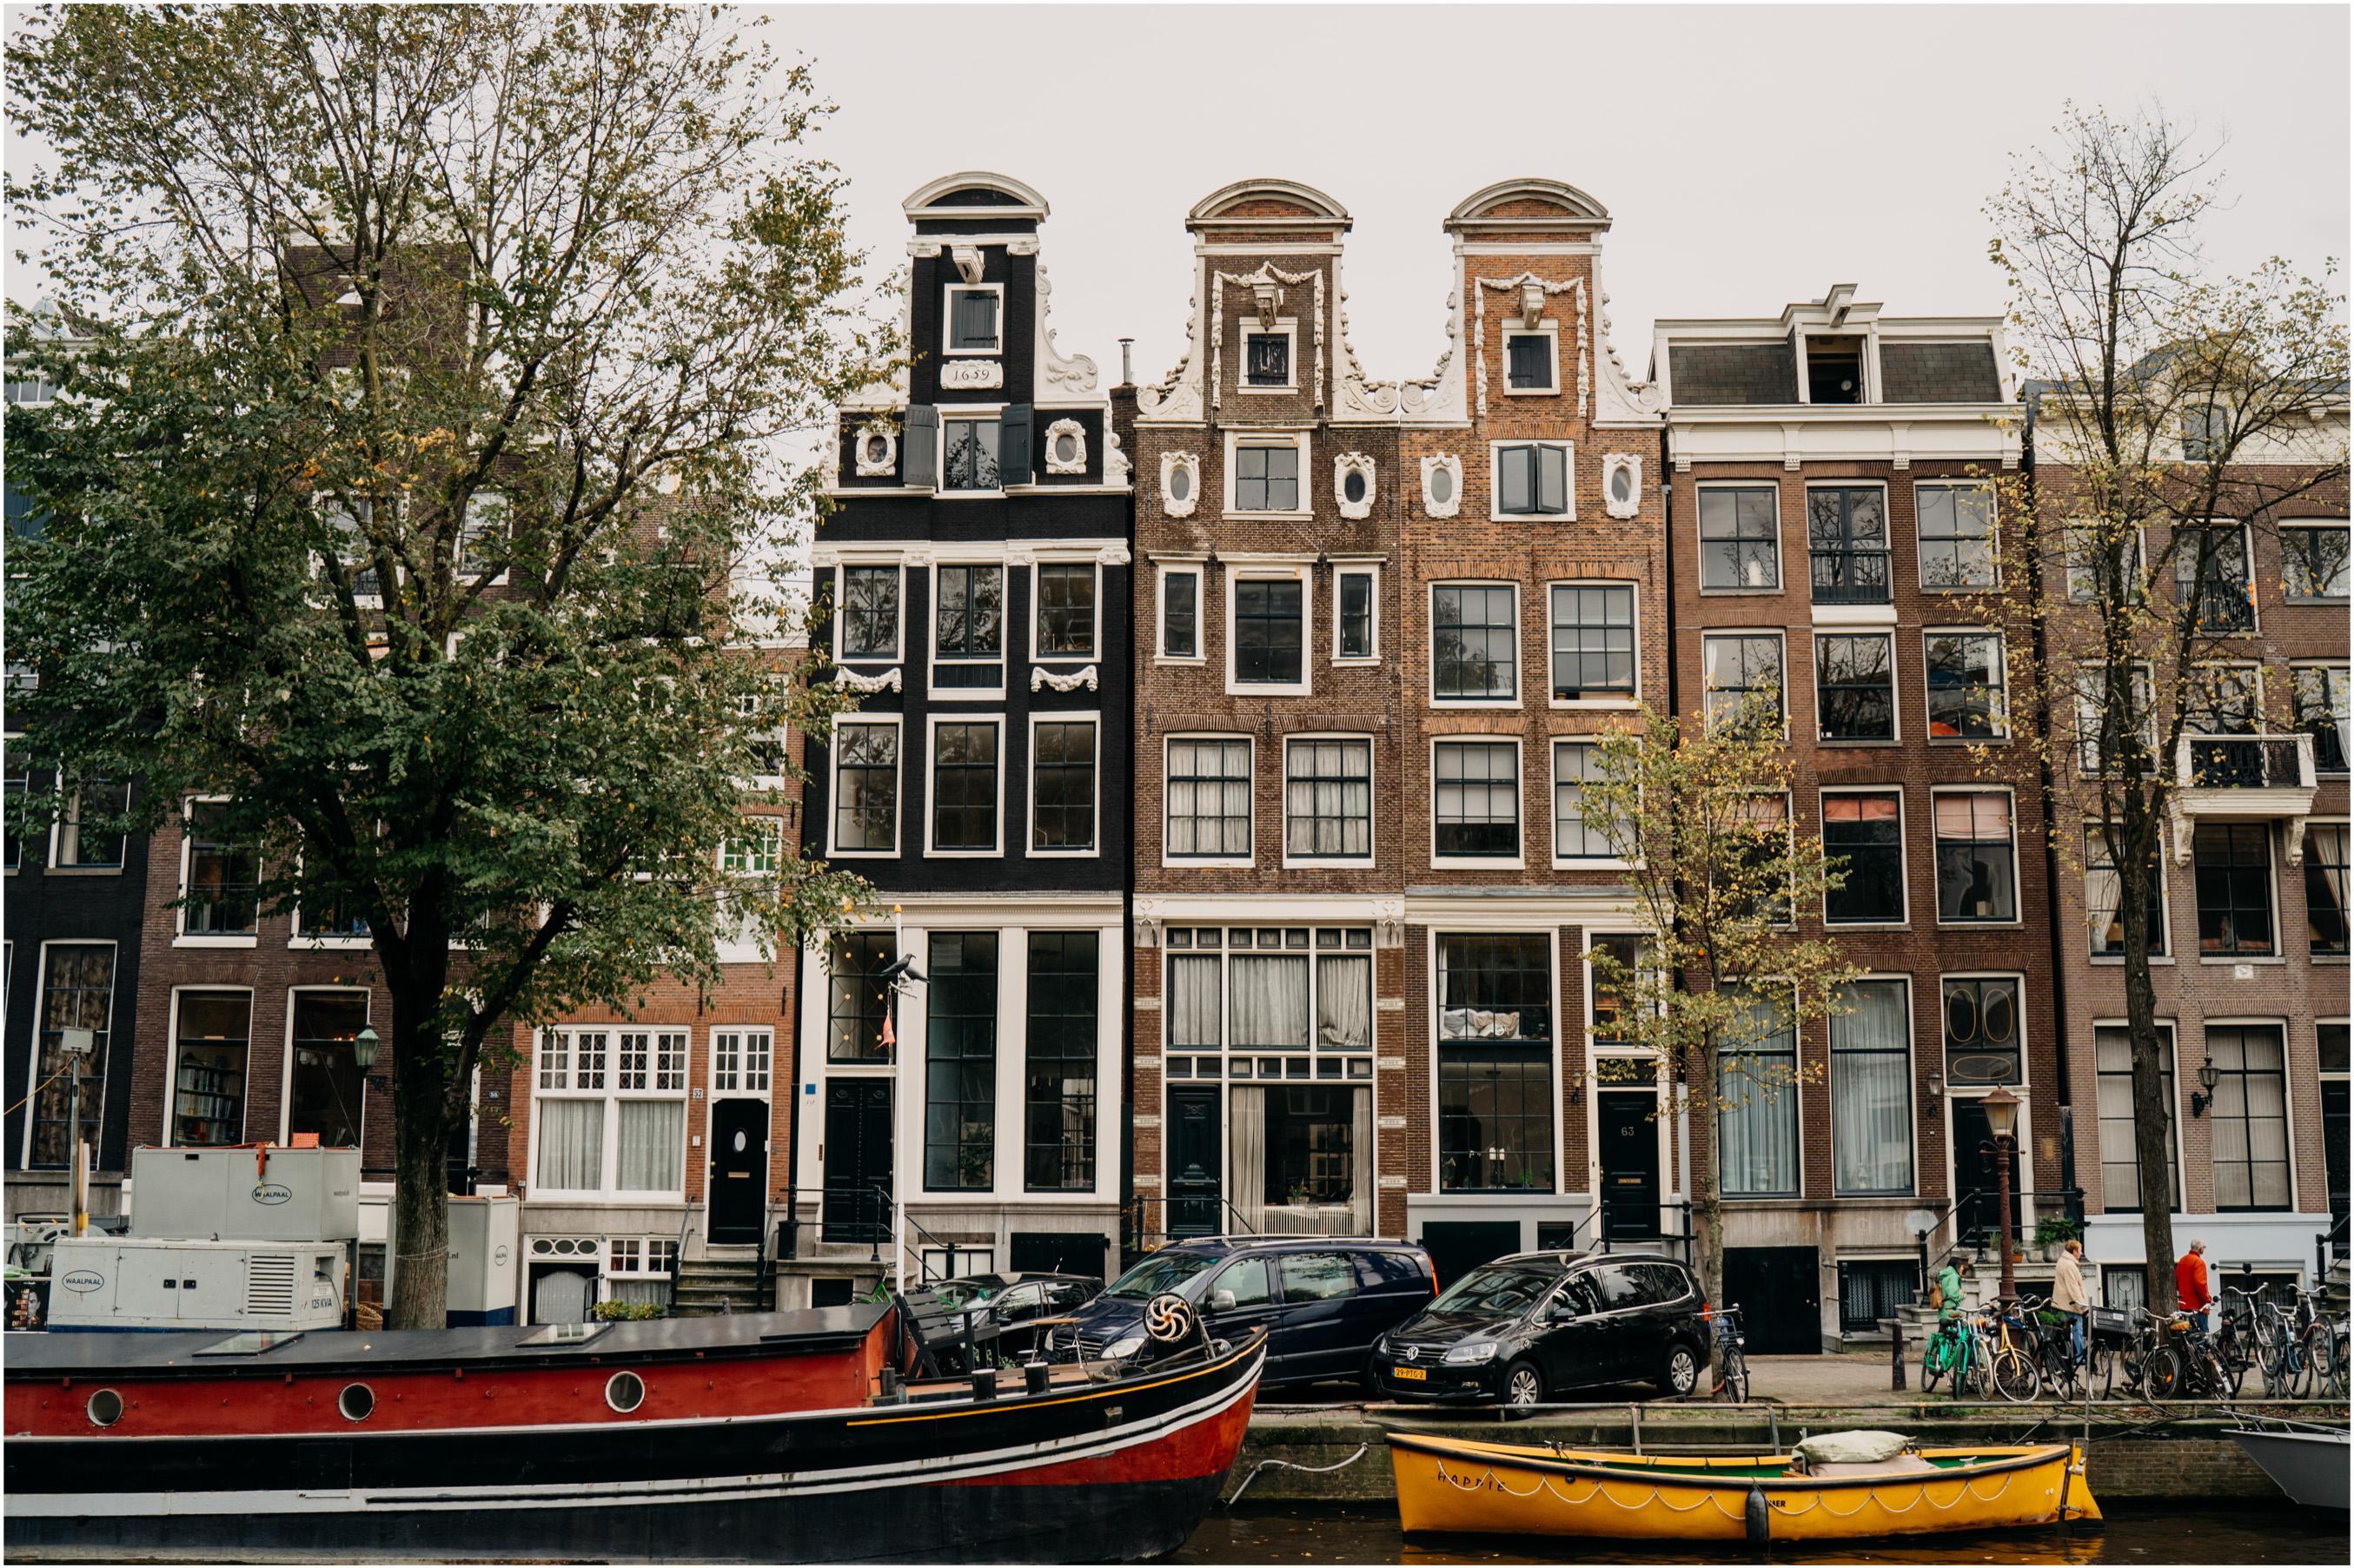 Amsterdam Travel Journal